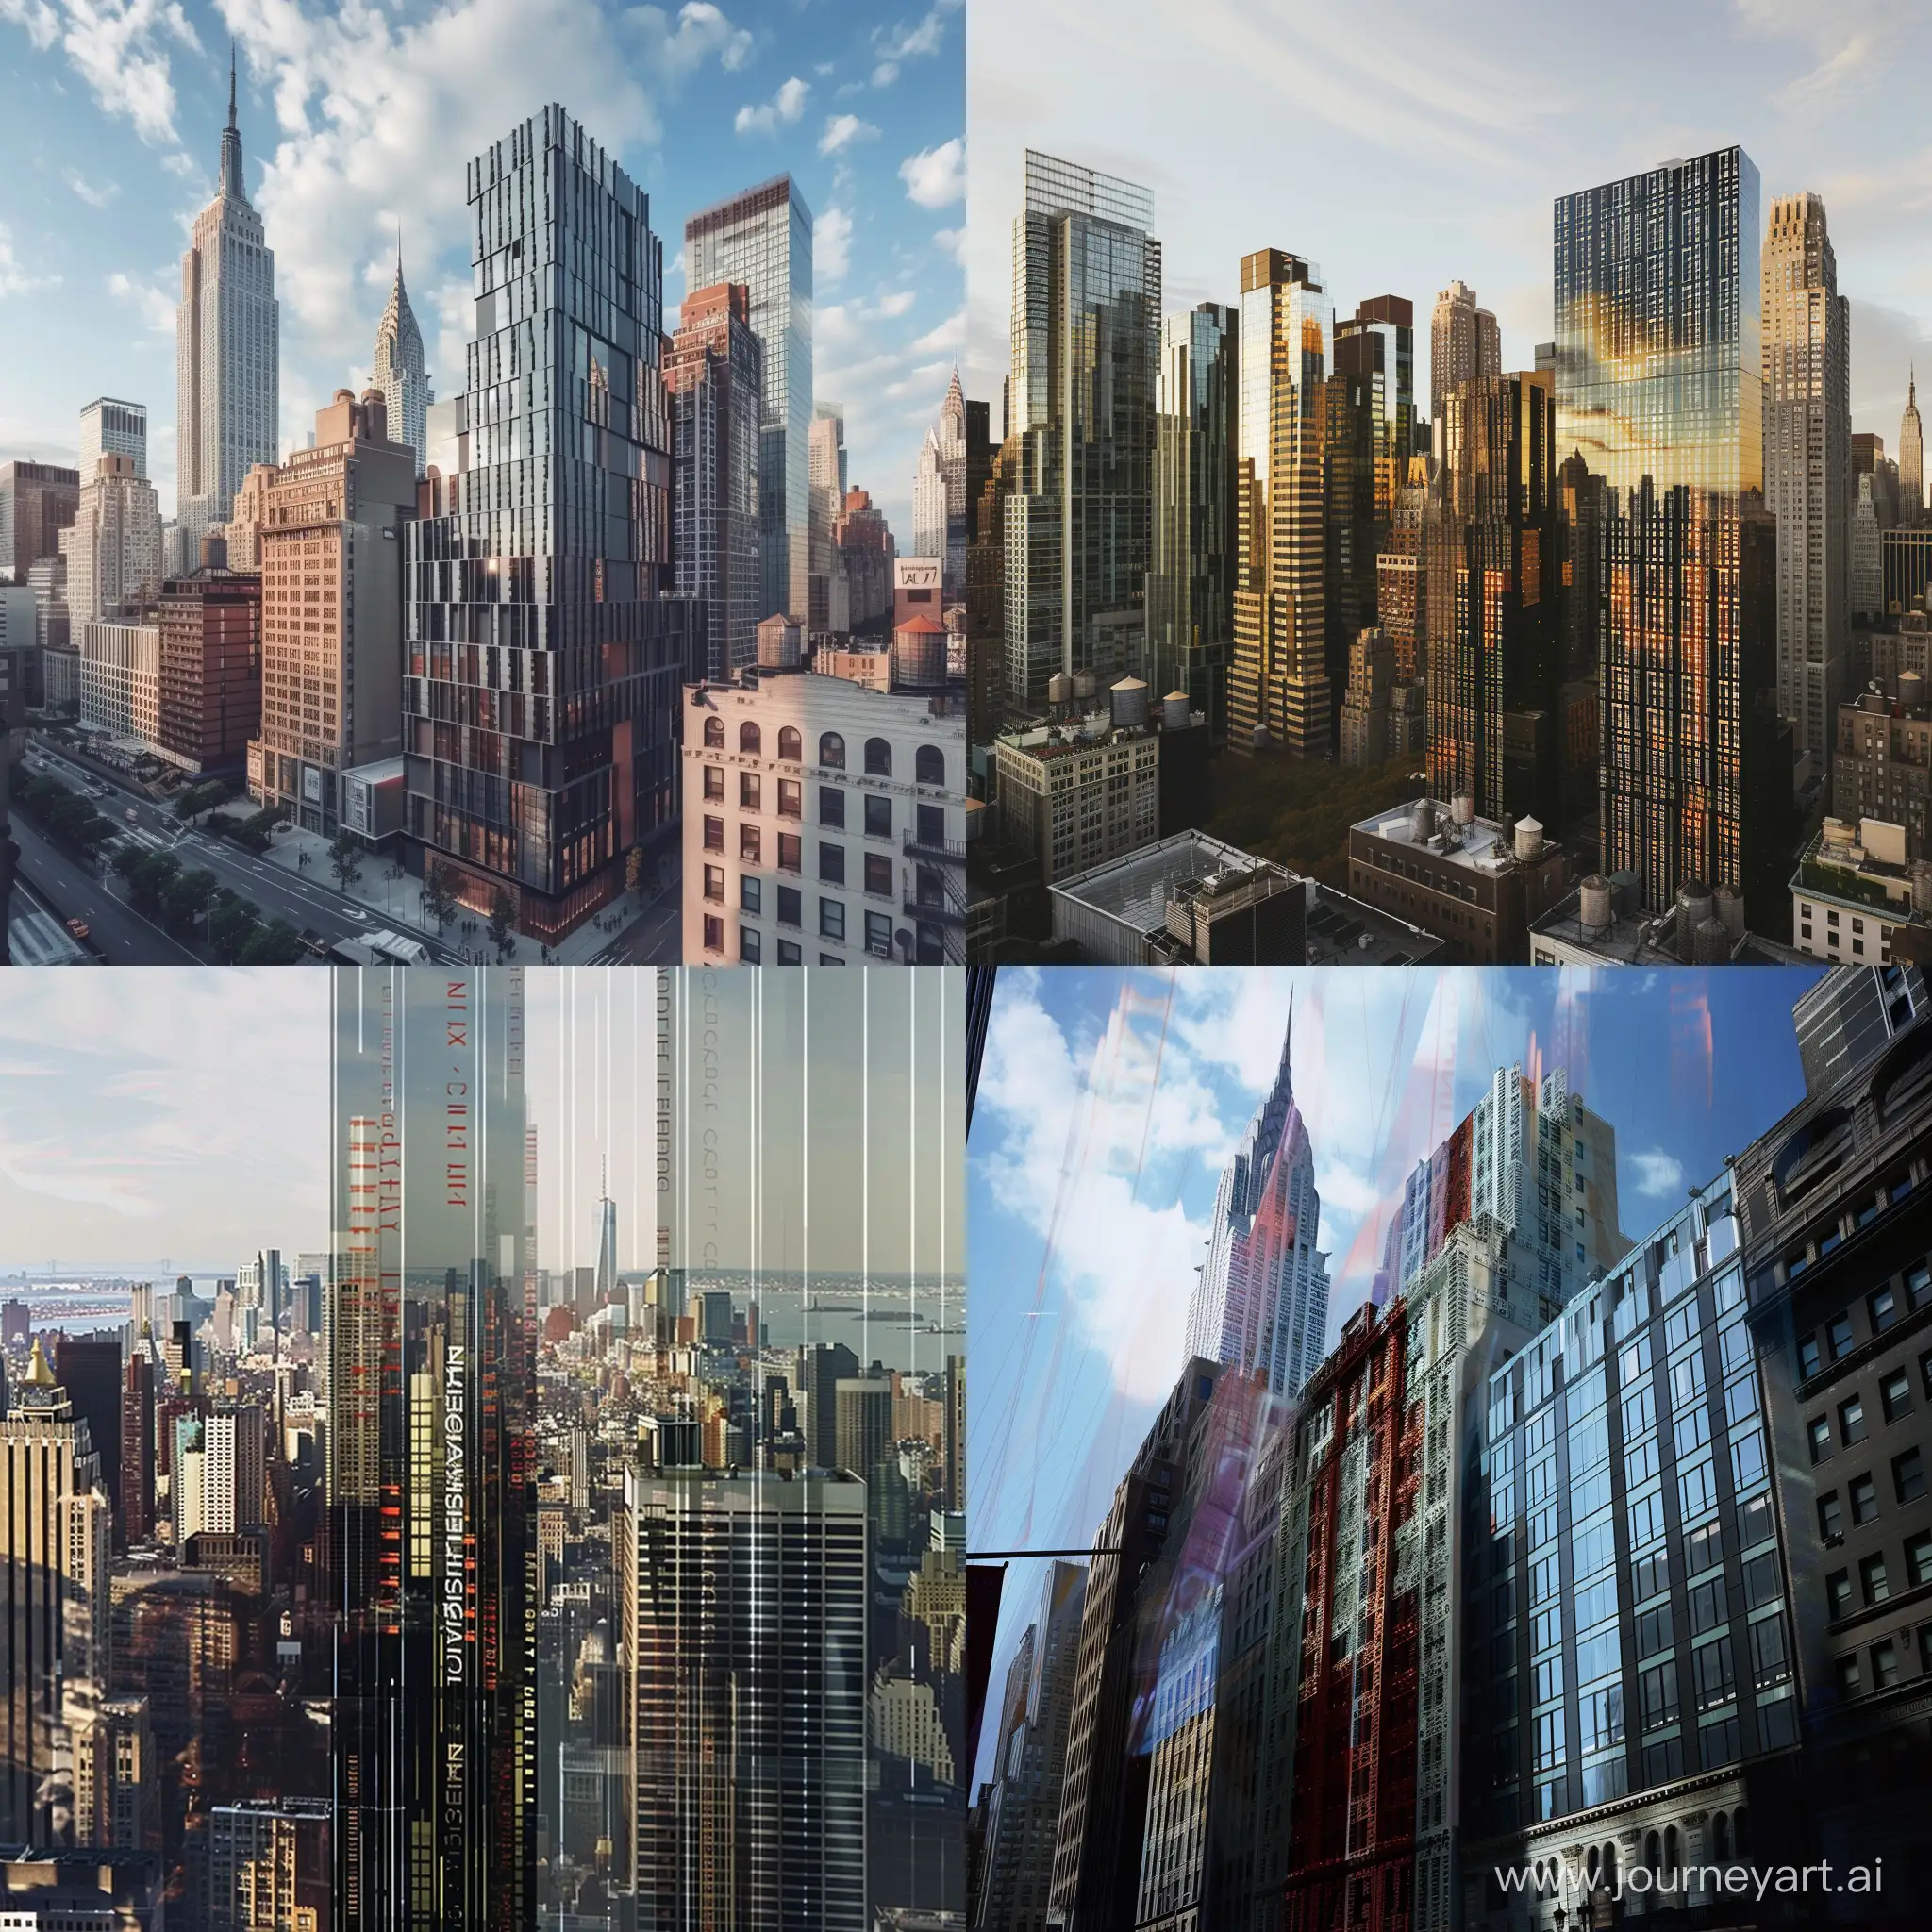 New-York-City-Barcode-Buildings-Urban-Skyscrapers-with-Distinctive-Facades